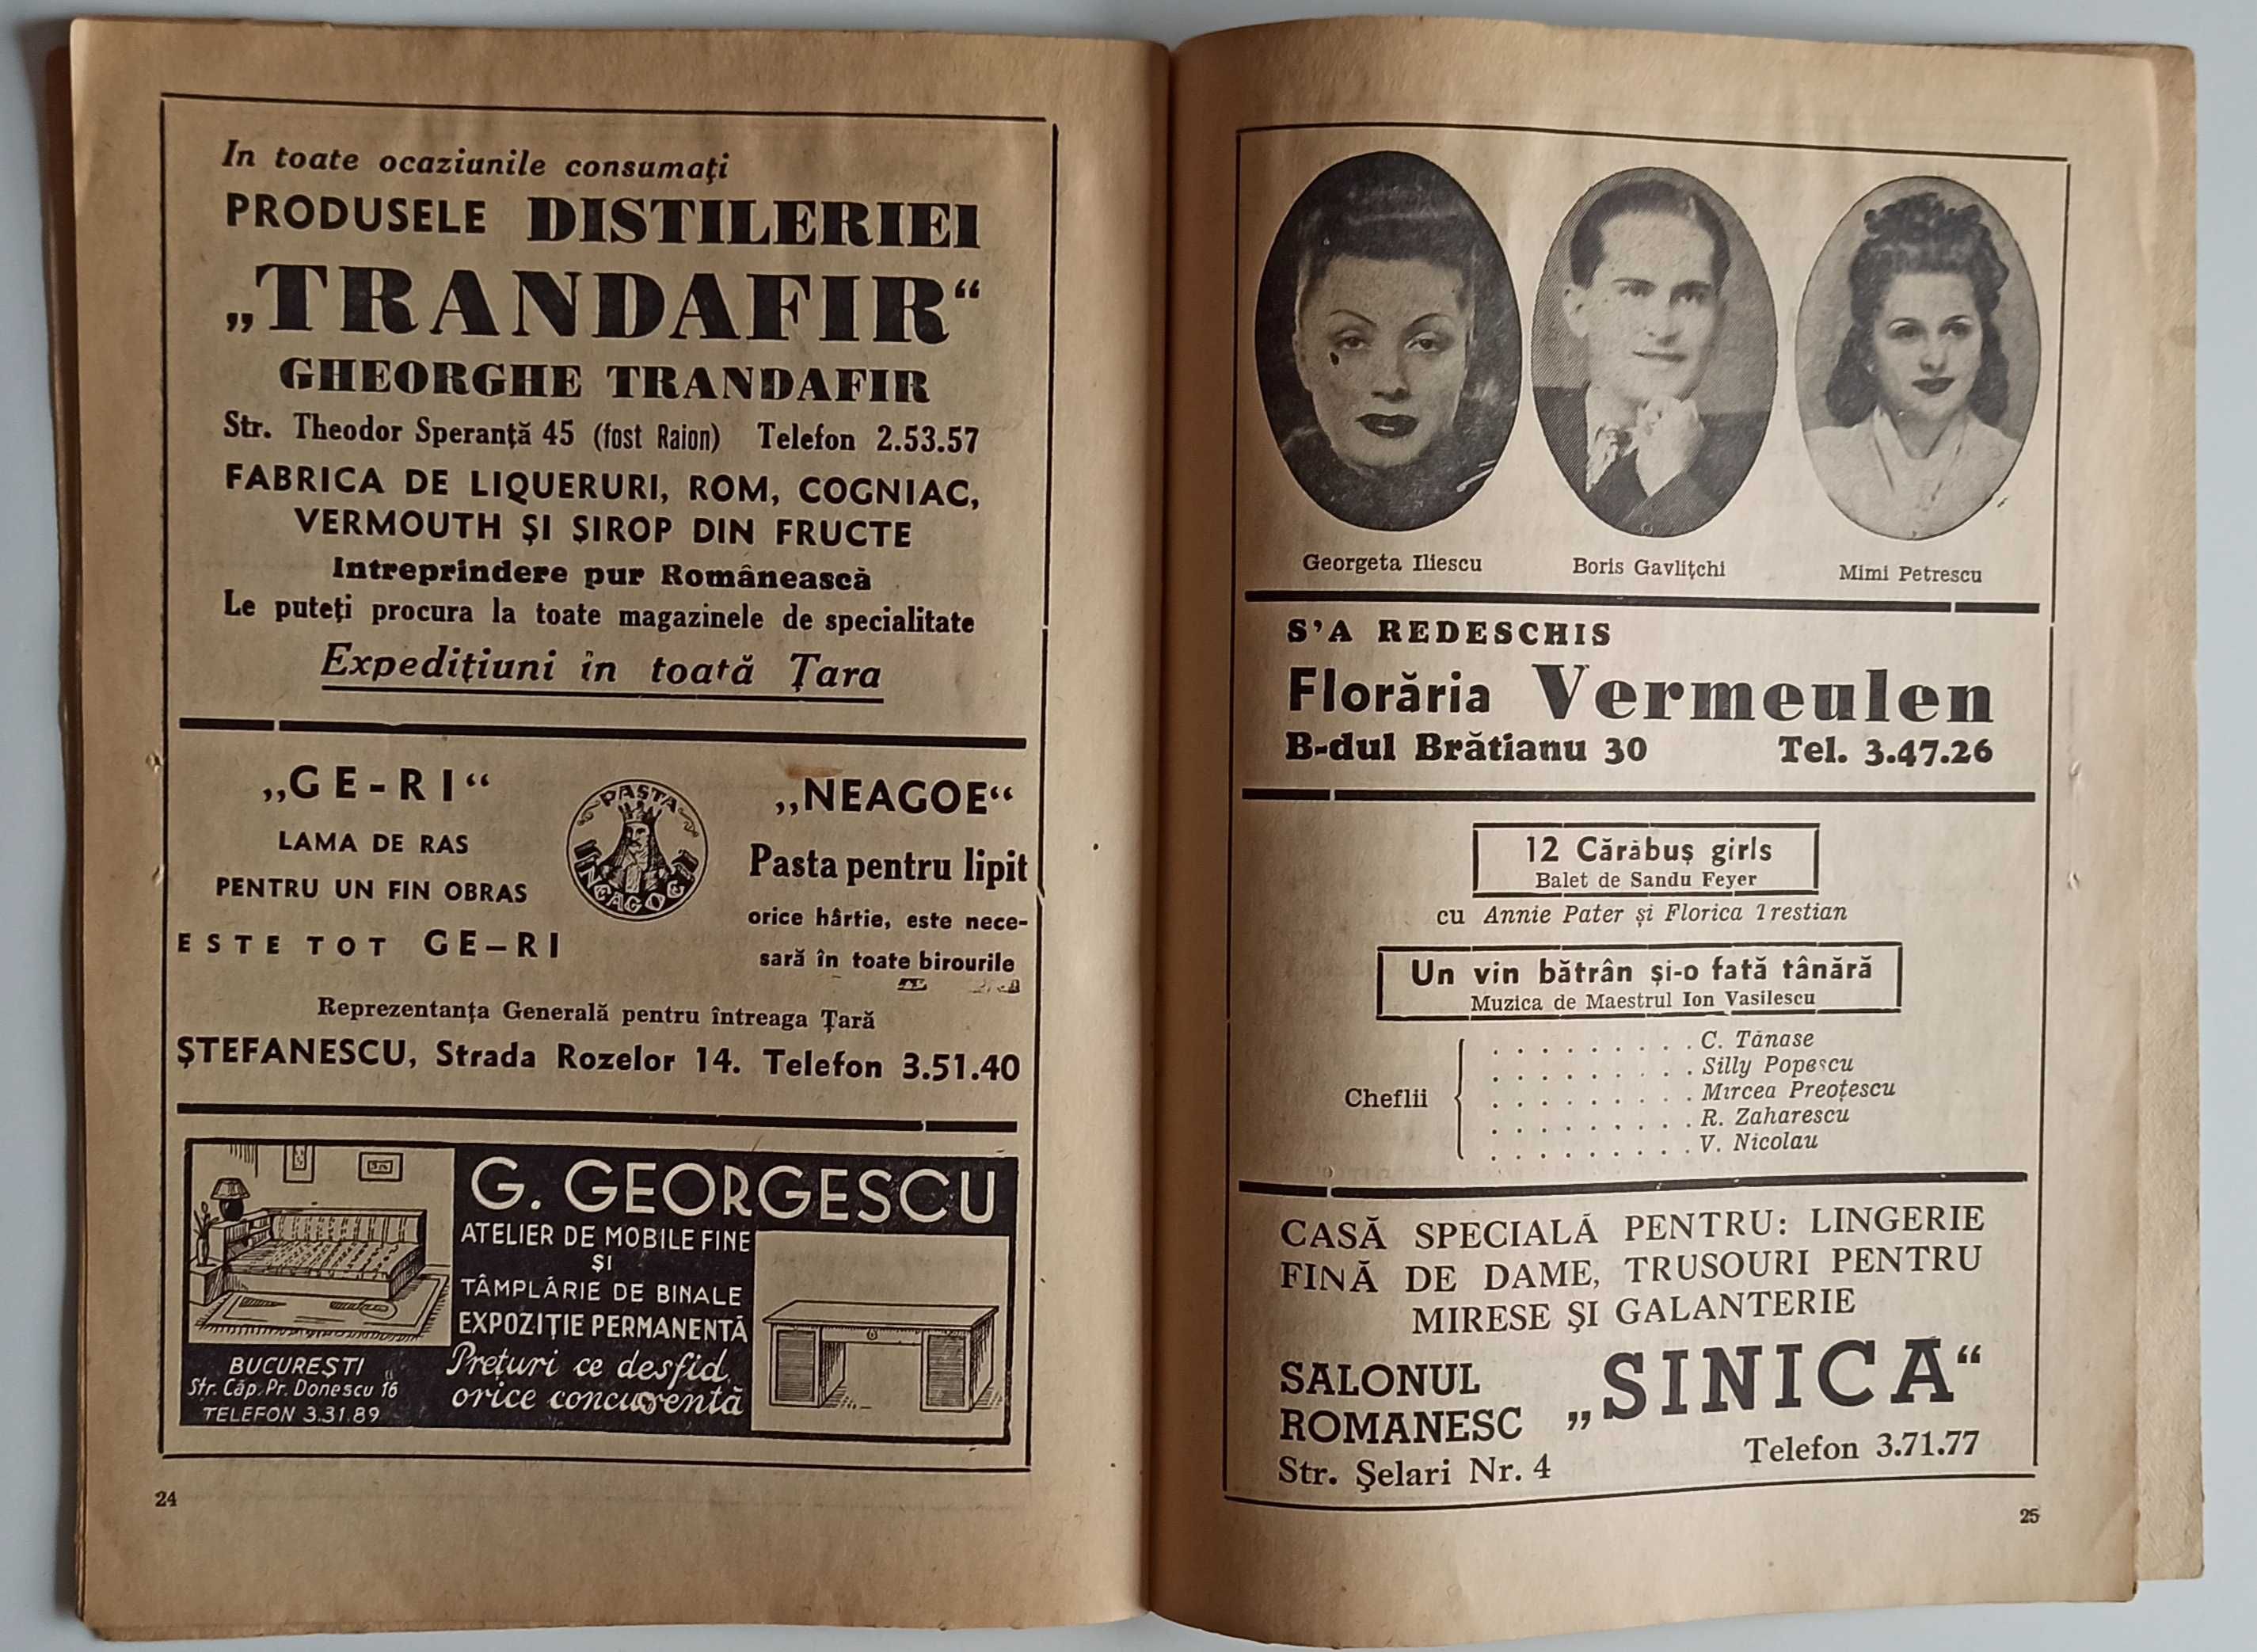 Revista program Teatrul Cărăbuș, Constantin Tănase anii 1930